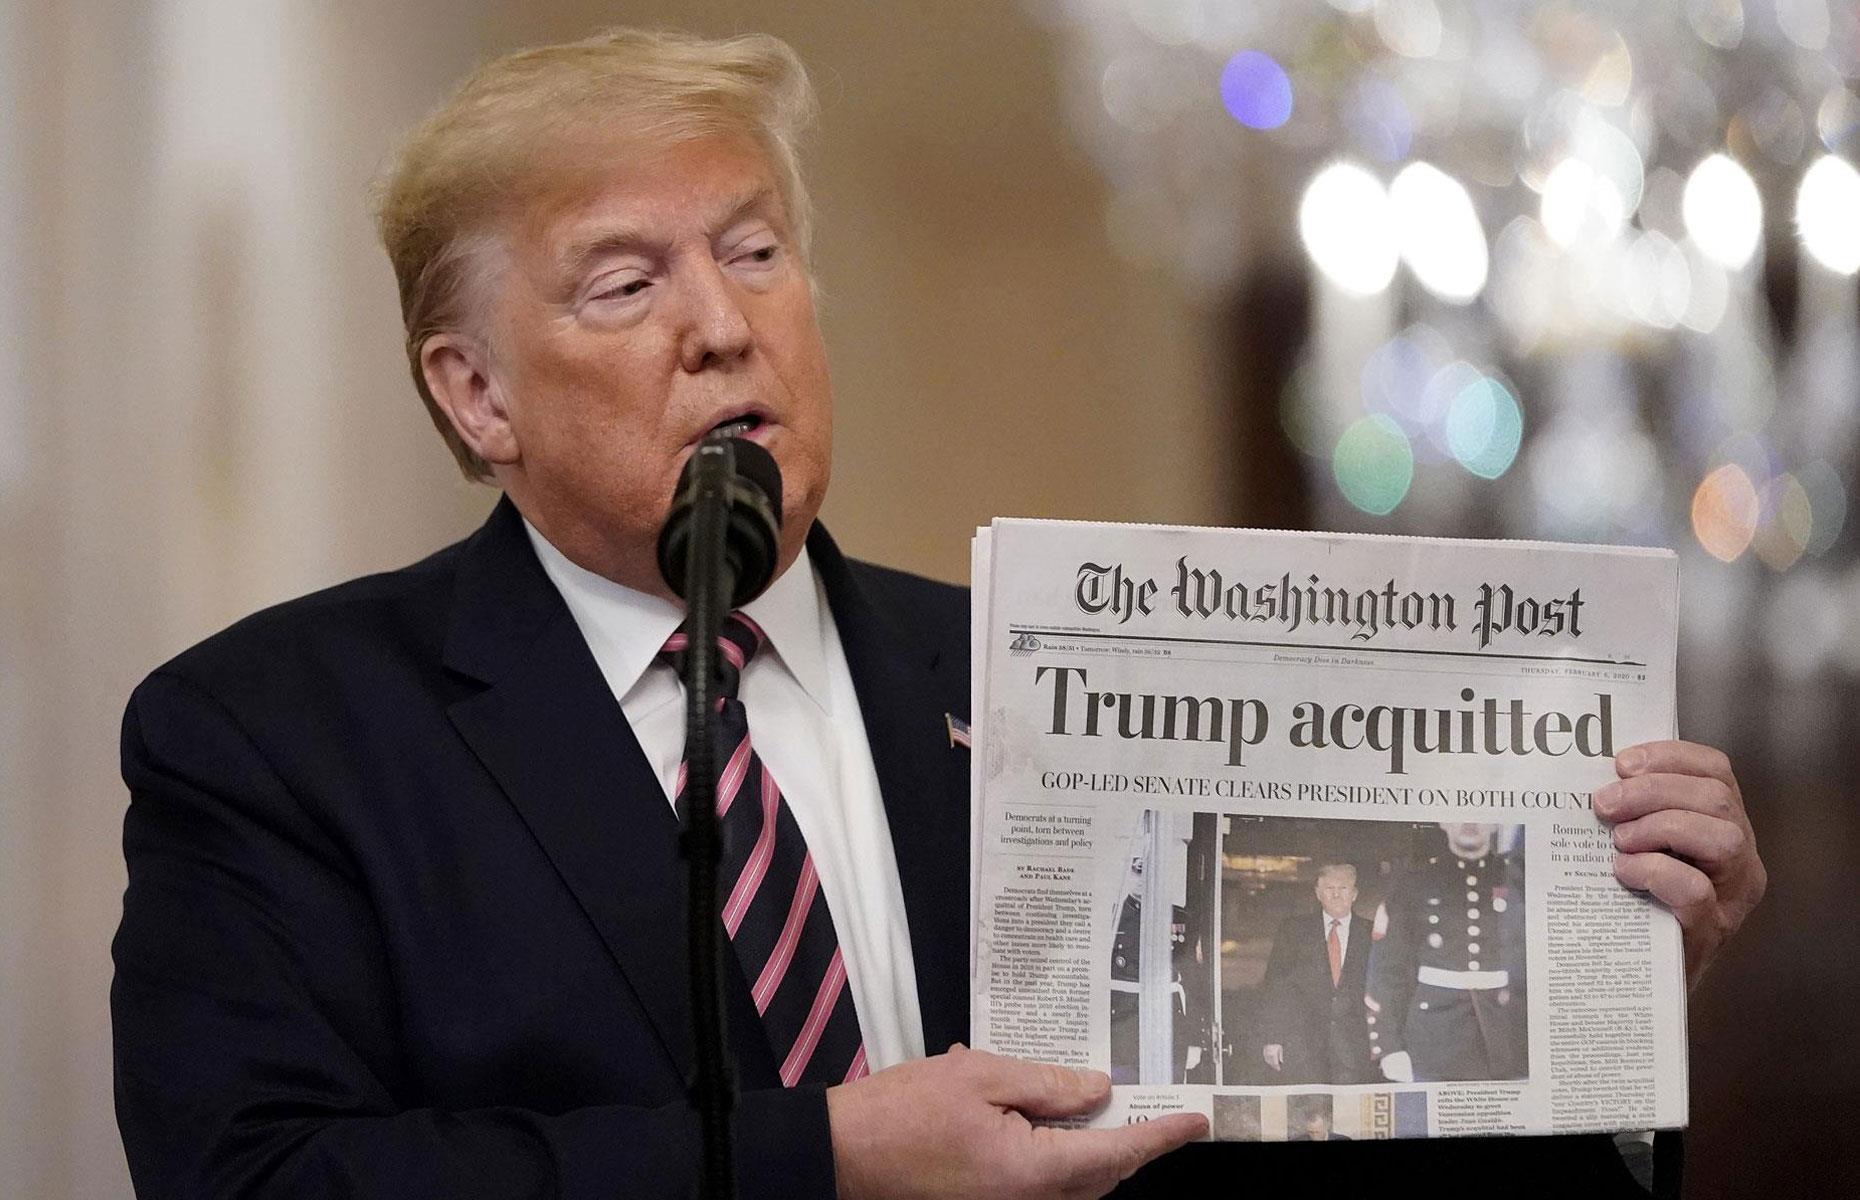 The Washington Post under Trump